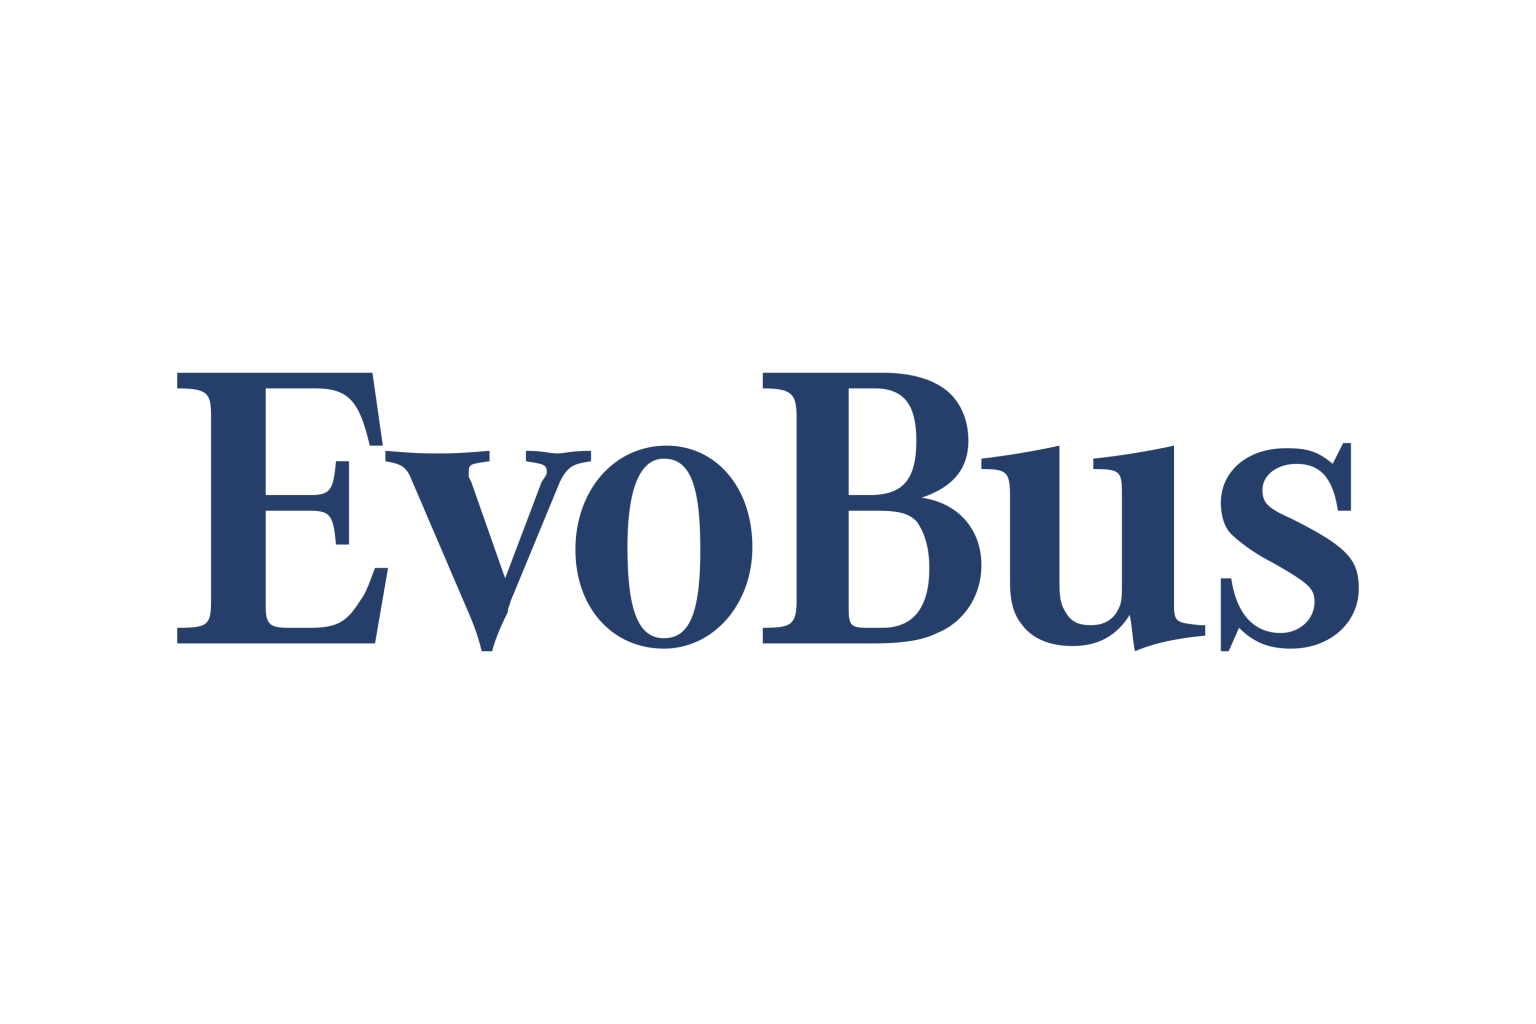 Brand its. EVOBUS логотип. Логотип ЕВОБУС Русслэнд. AEG logo.